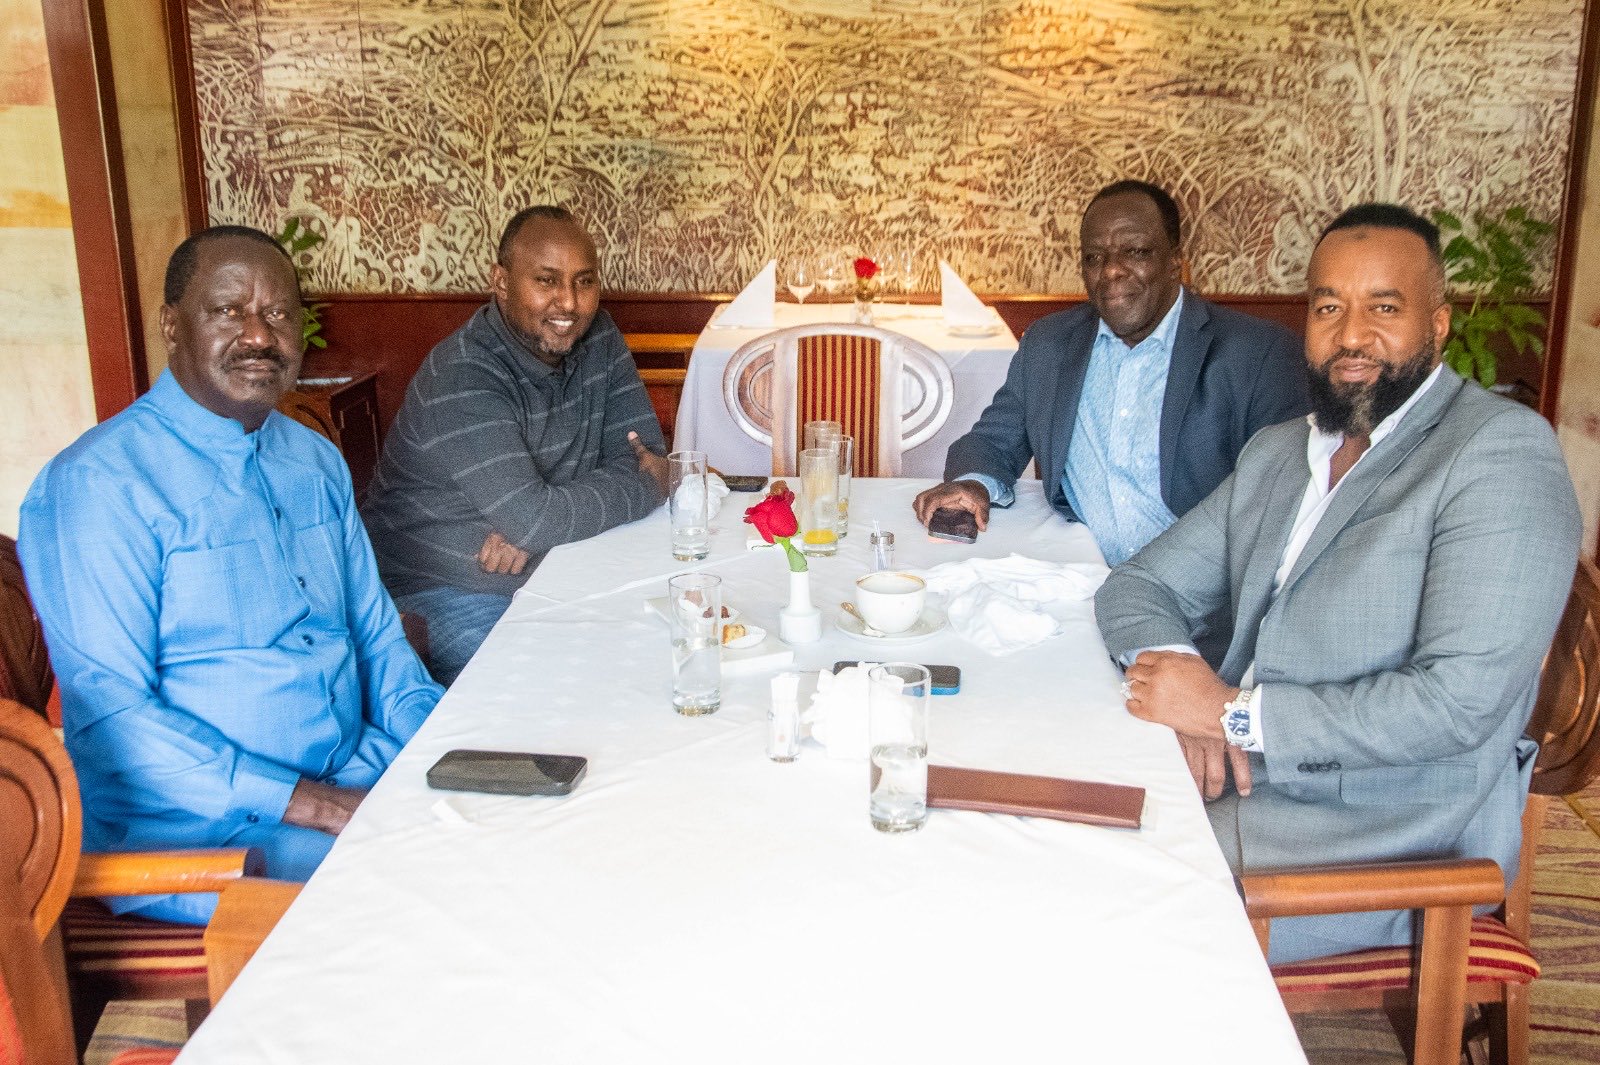 Raila Odinga, Junet Mohamed, Wycliffe Oparanya, and Hassan Joho.